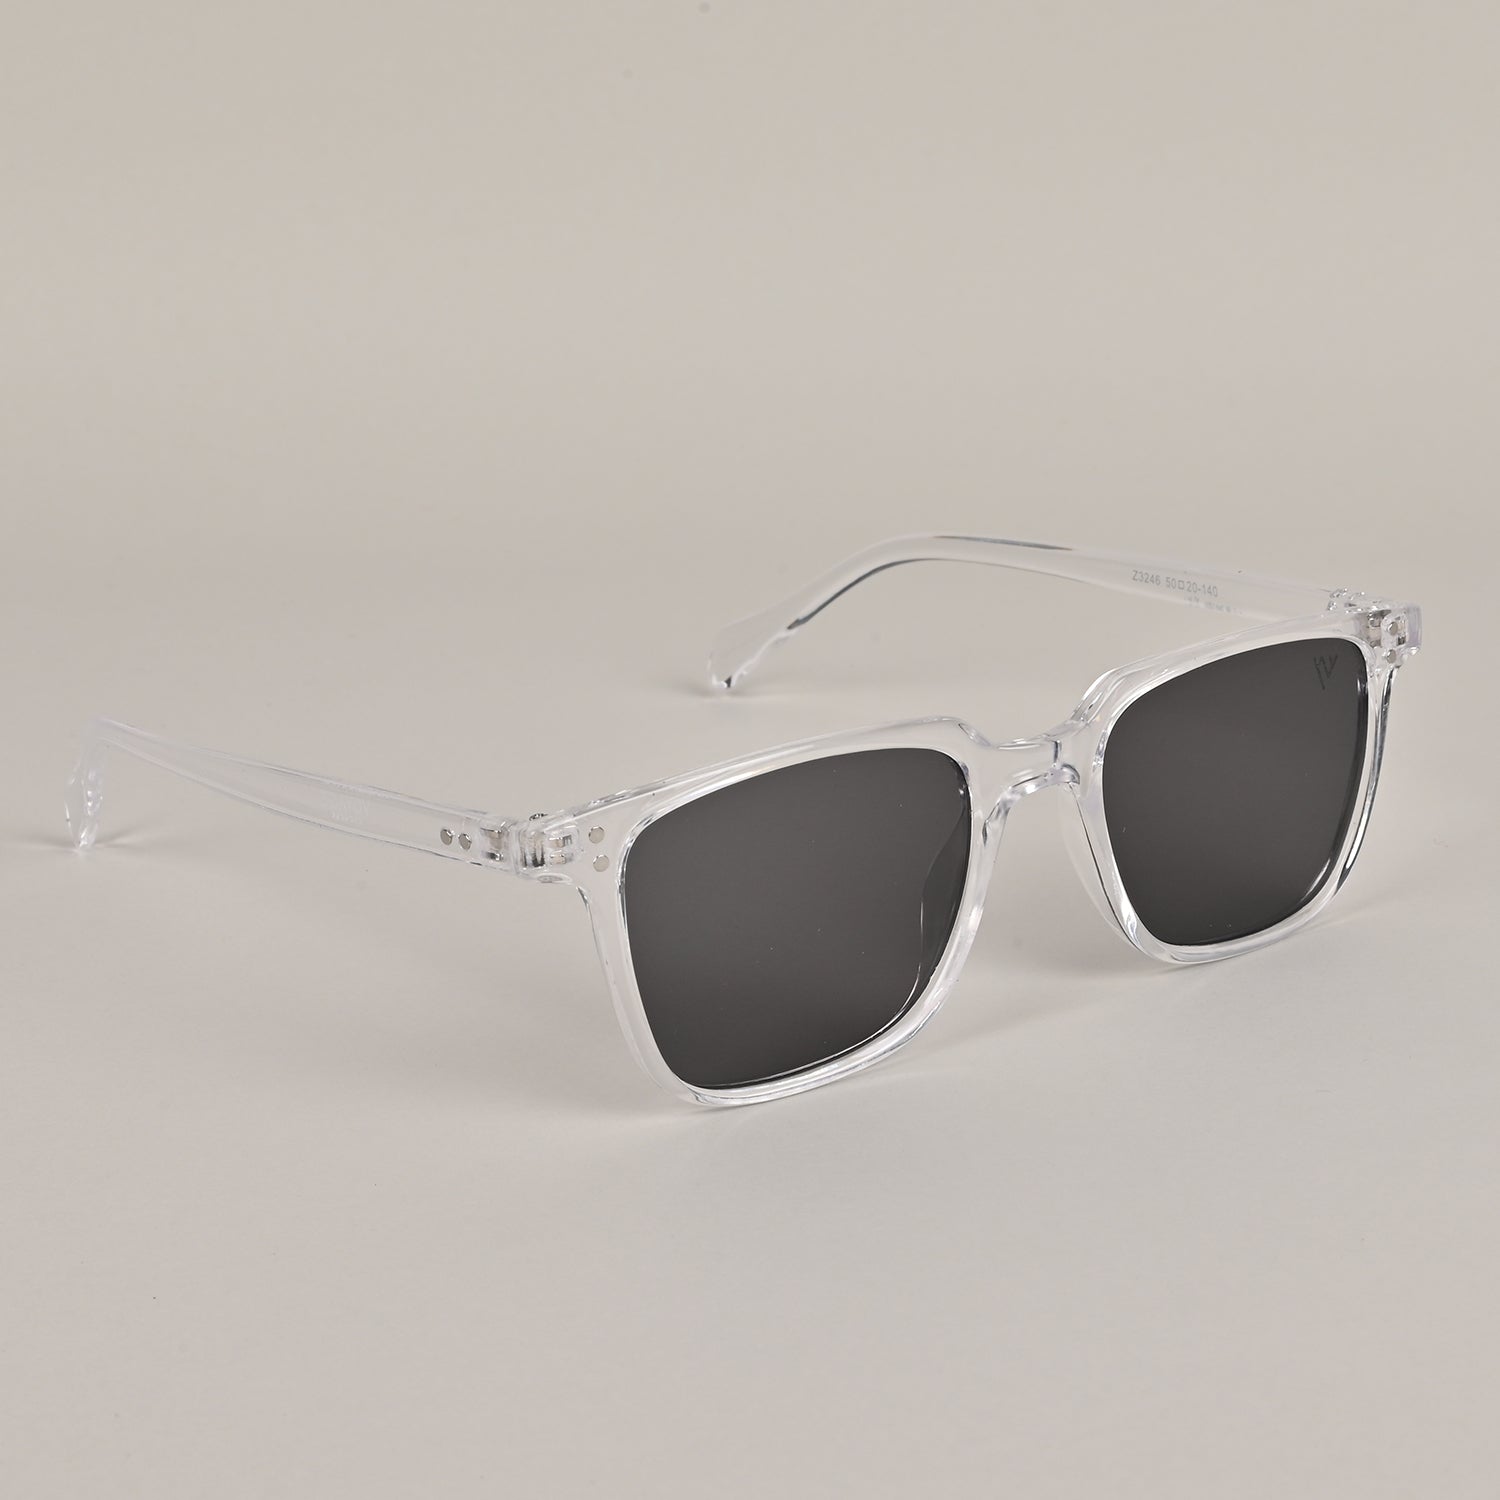 Voyage Black Wayfarer Sunglasses MG3730